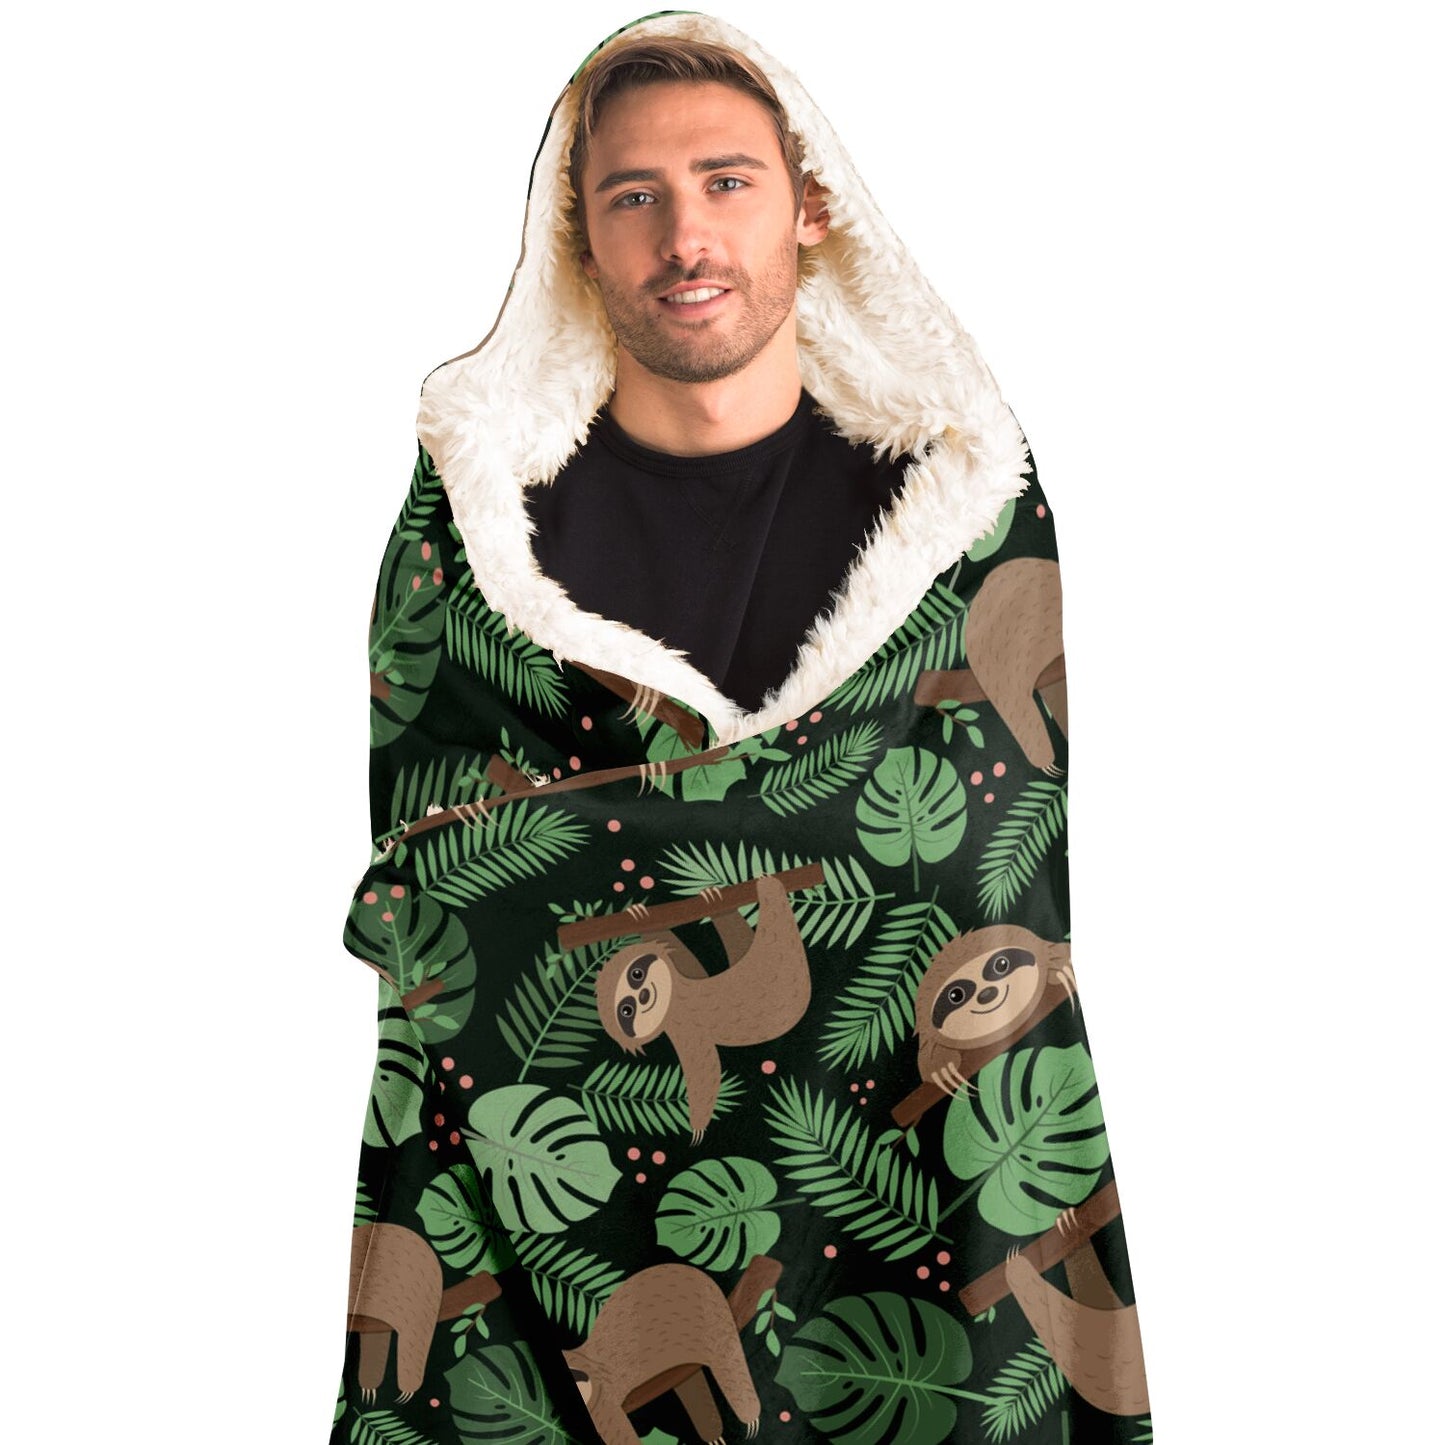 Sloth Green Hooded Blanket, Sleeping Animal Leaves Plants Cute Sherpa Fleece Soft Fluffy Cozy Warm Adult Men Women Kids Large Gift Starcove Fashion